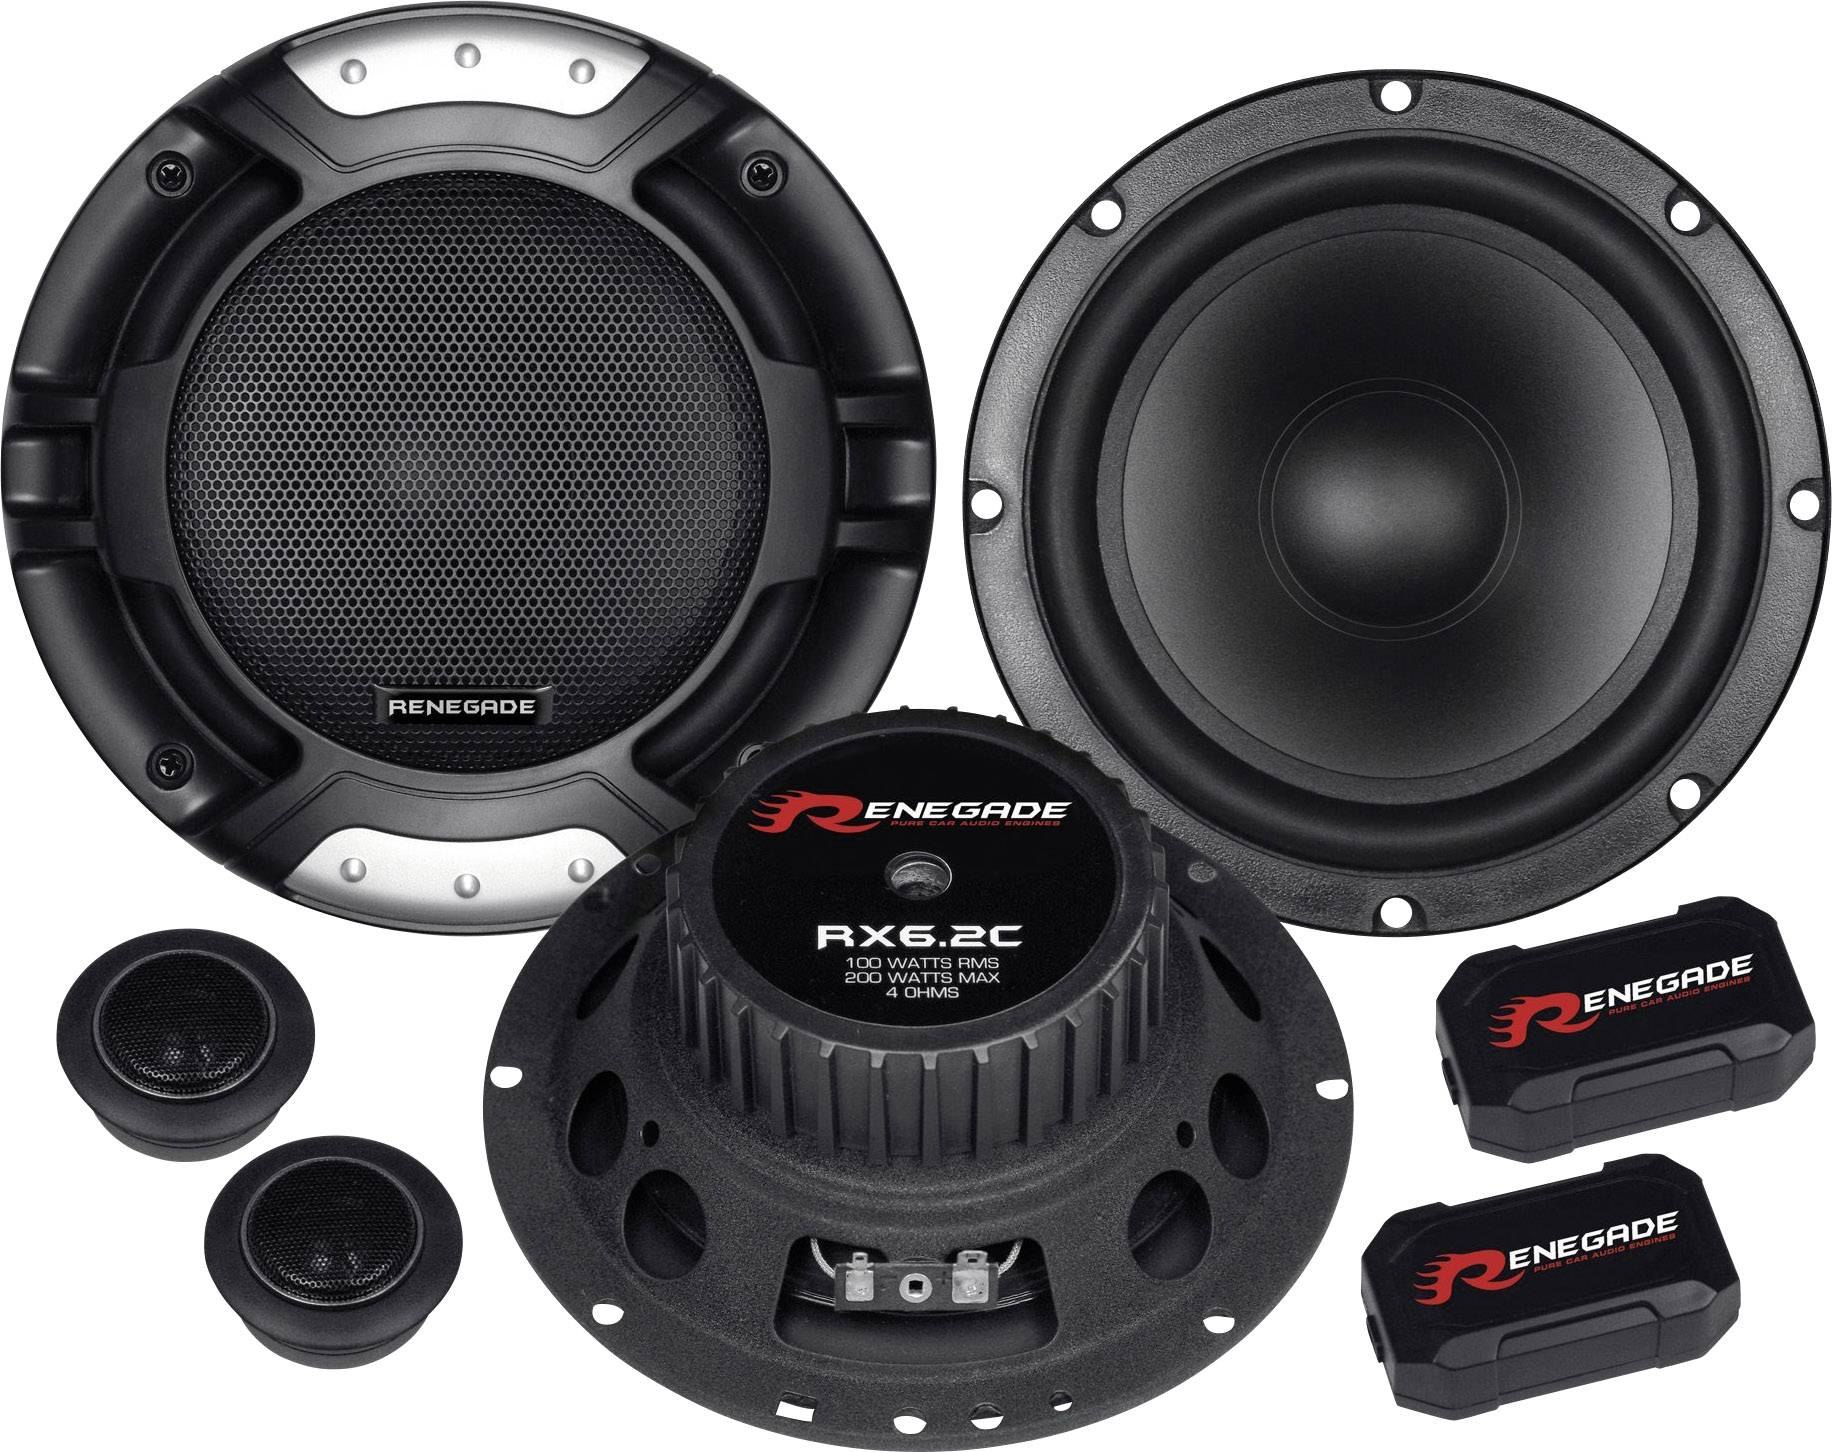 Hifonics ZX-6.2C 2-way flush mount speaker set 250 W Content: 1 pc 